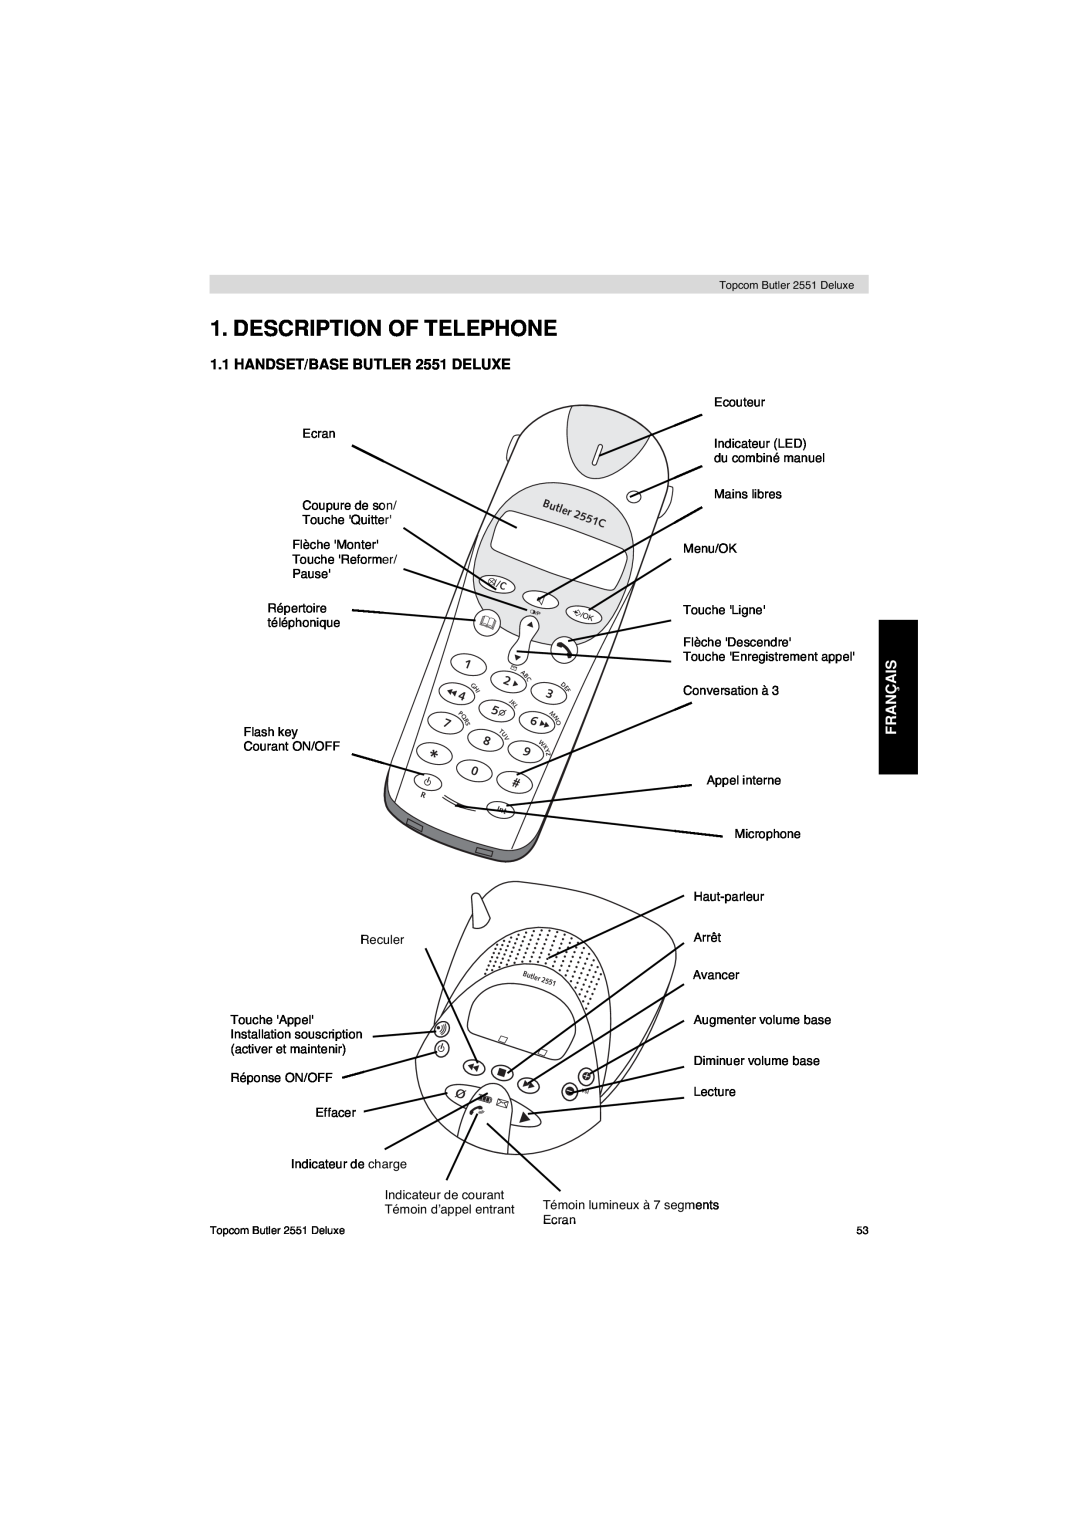 Topcom manual Description Of Telephone, HANDSET/BASE BUTLER 2551 DELUXE, 2551C, Français 